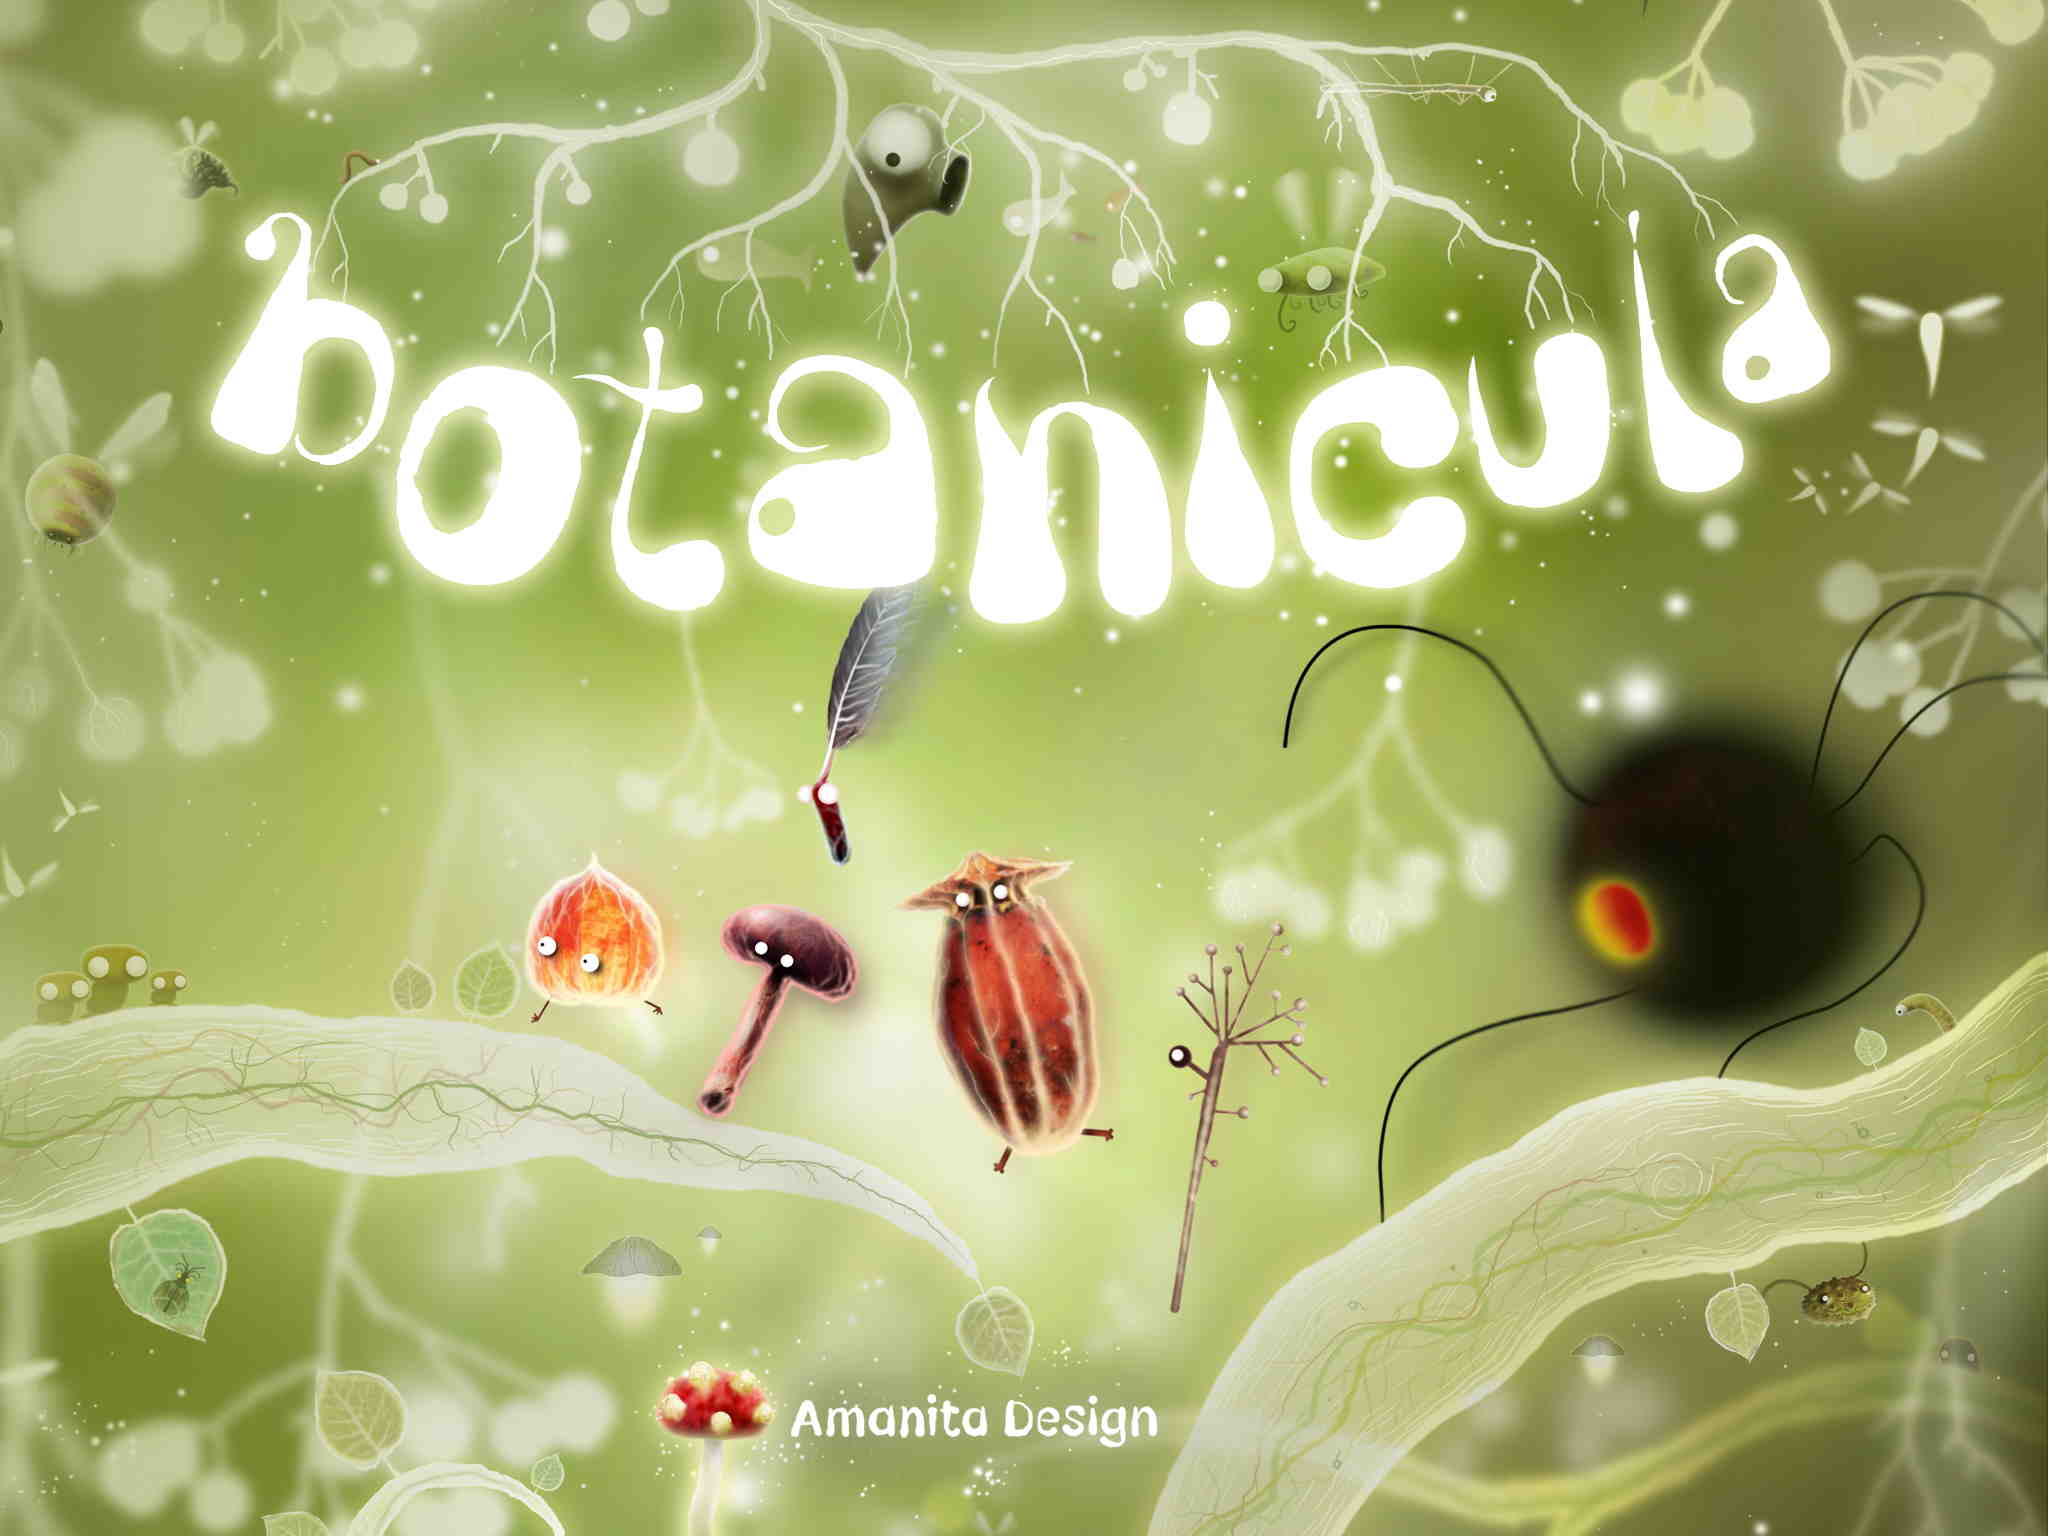 Botanicula_01